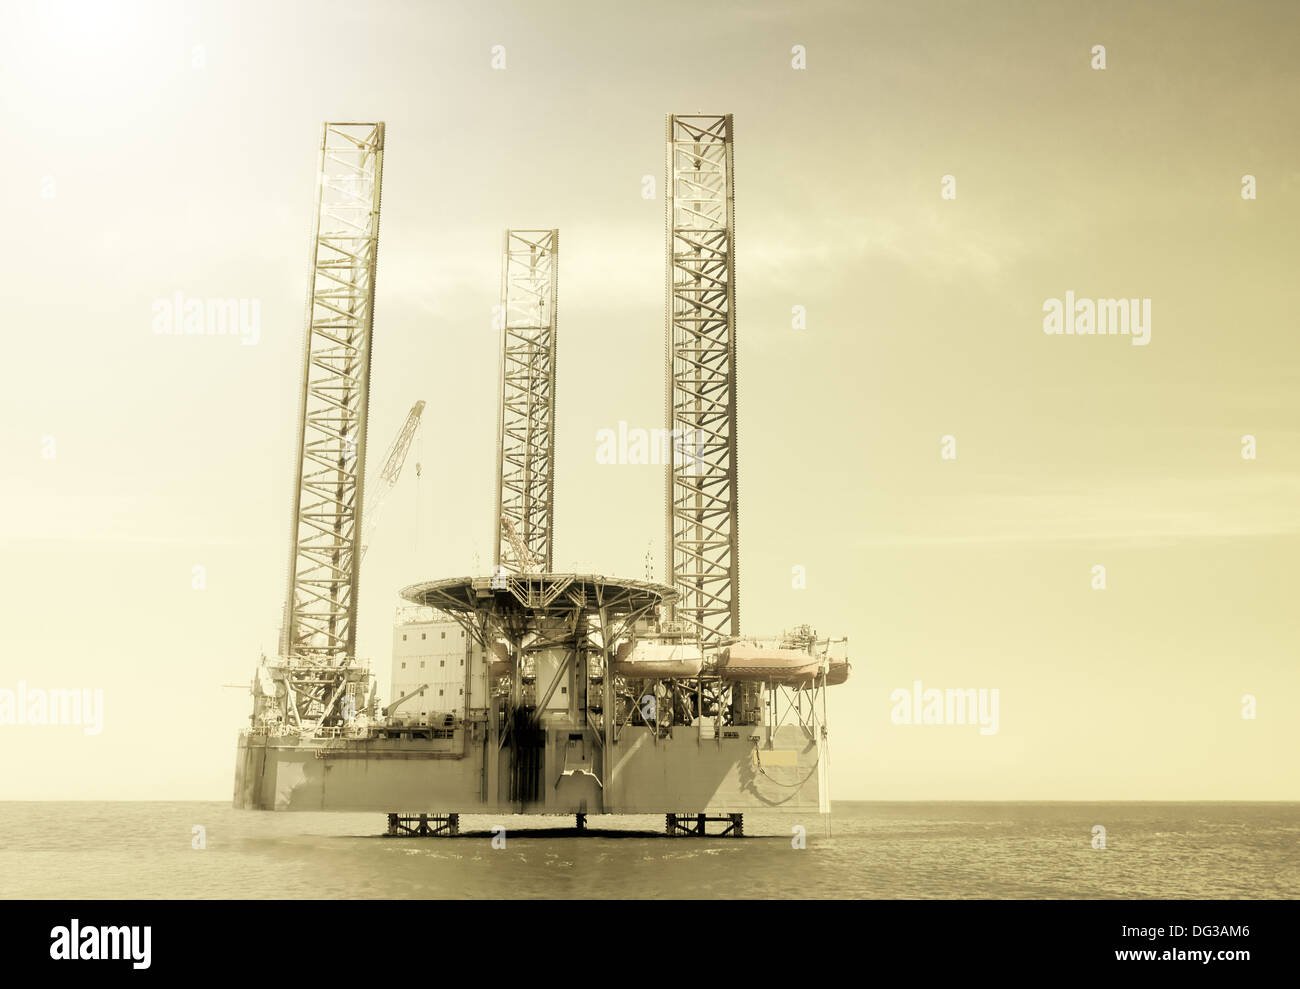 Off shore oil drilling platform Stock Photo